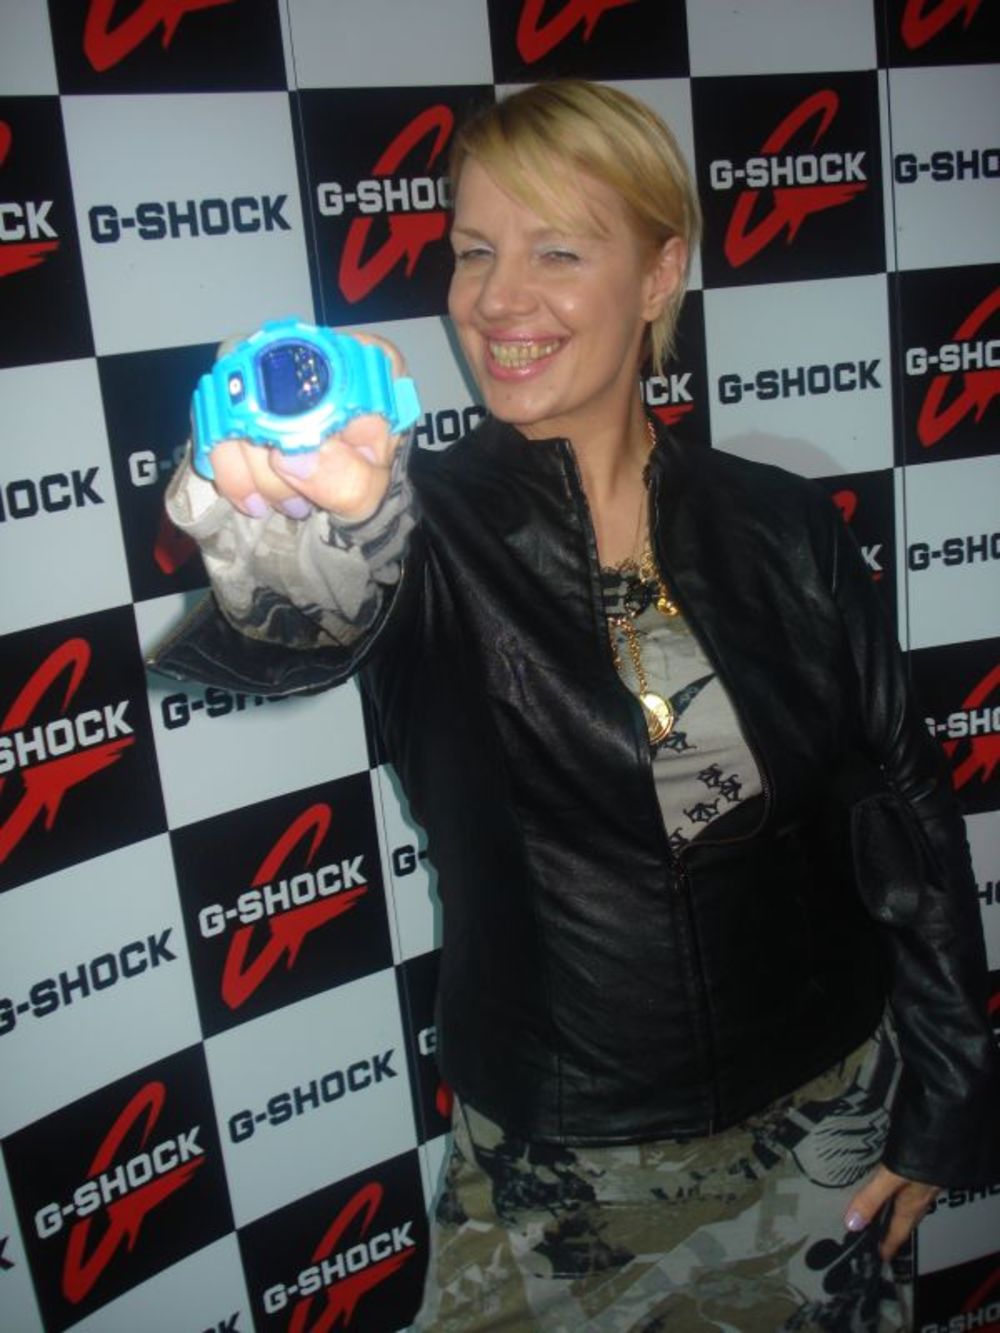 Na splavu Freestyler održan je veliki G-Shock party u sklopu večeri I Love R’n’B kome su prisustvovale brojne poznate ličnosti